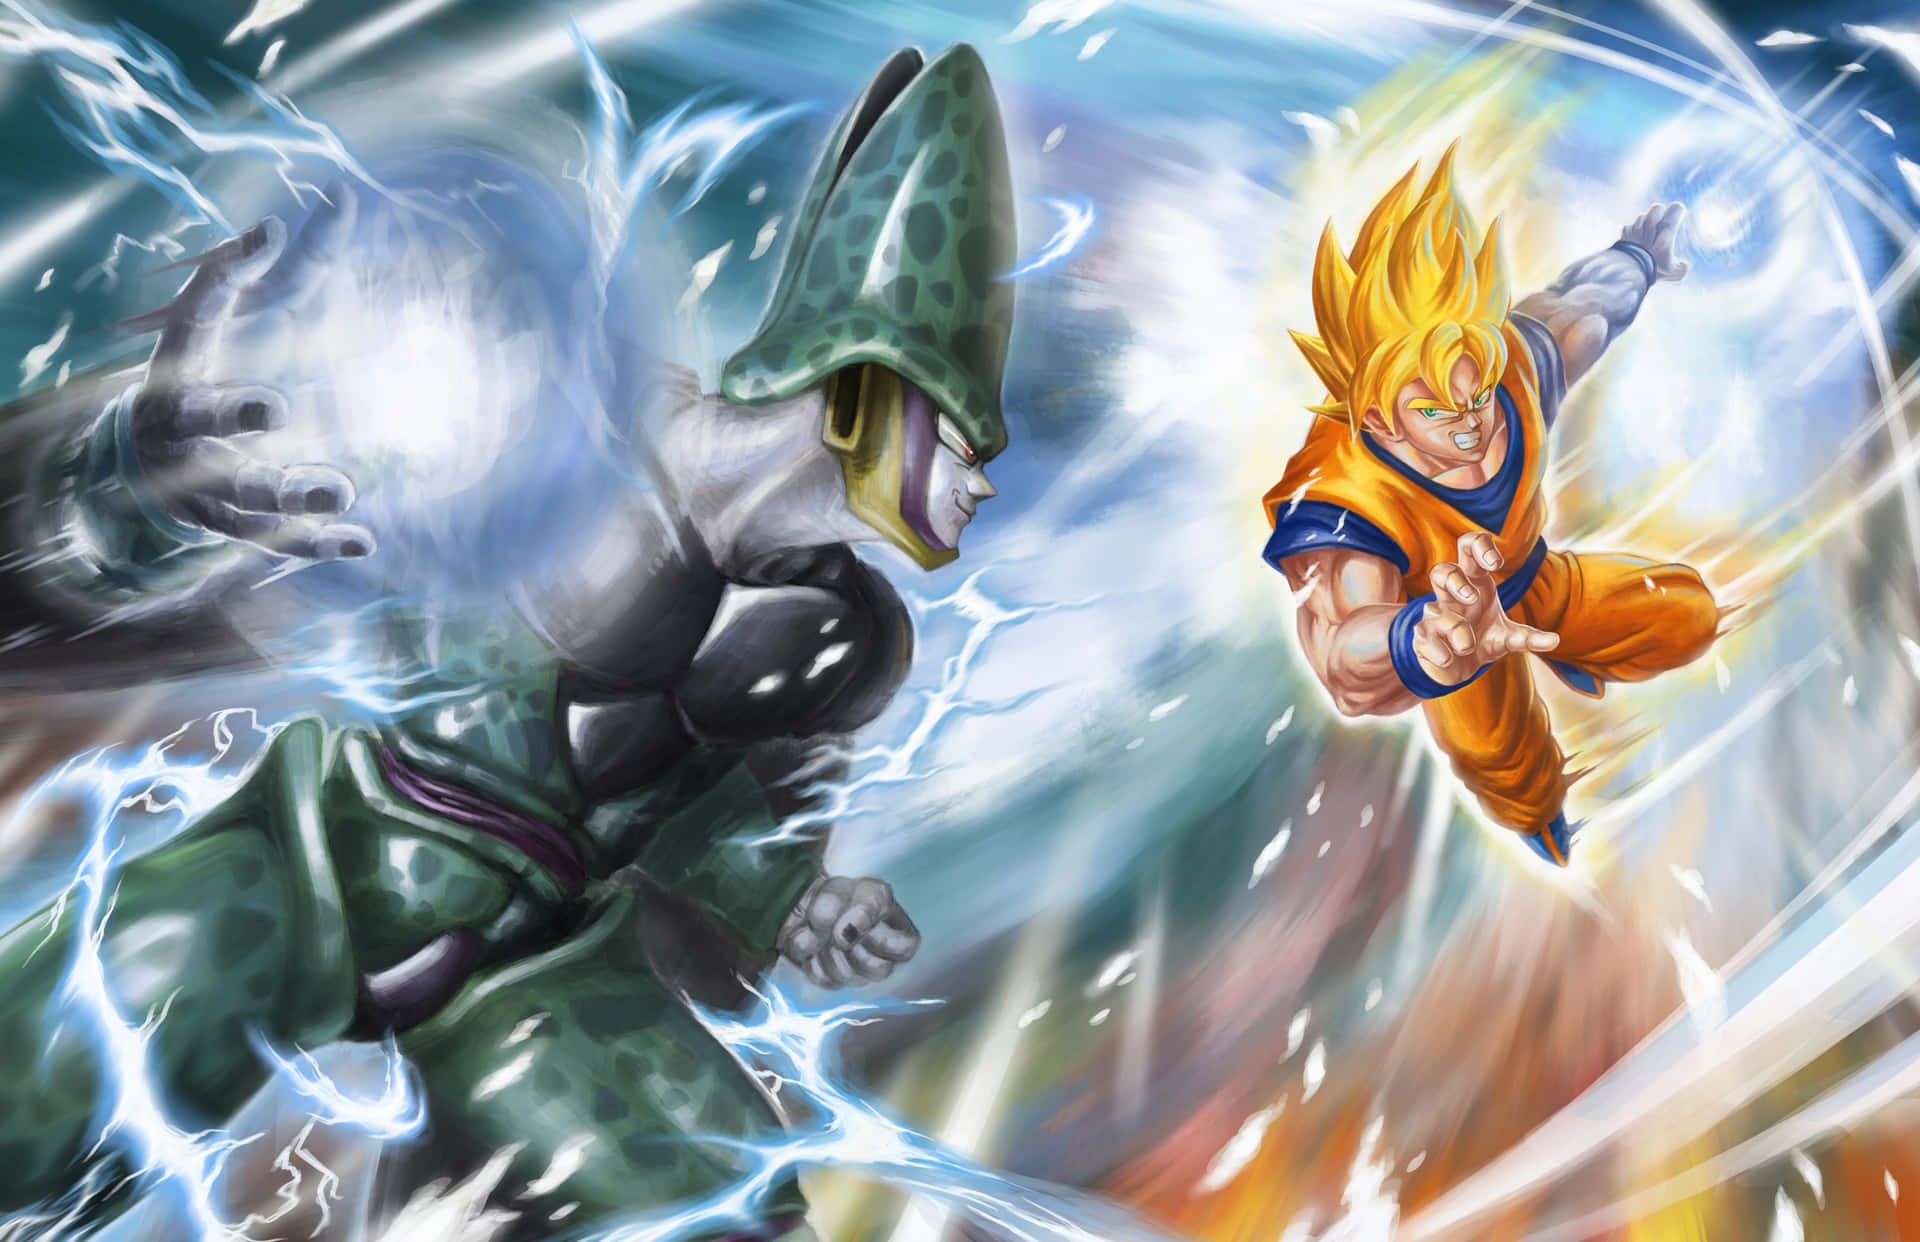 Intense Battle between Goku and Vegeta in Dragon Ball Z